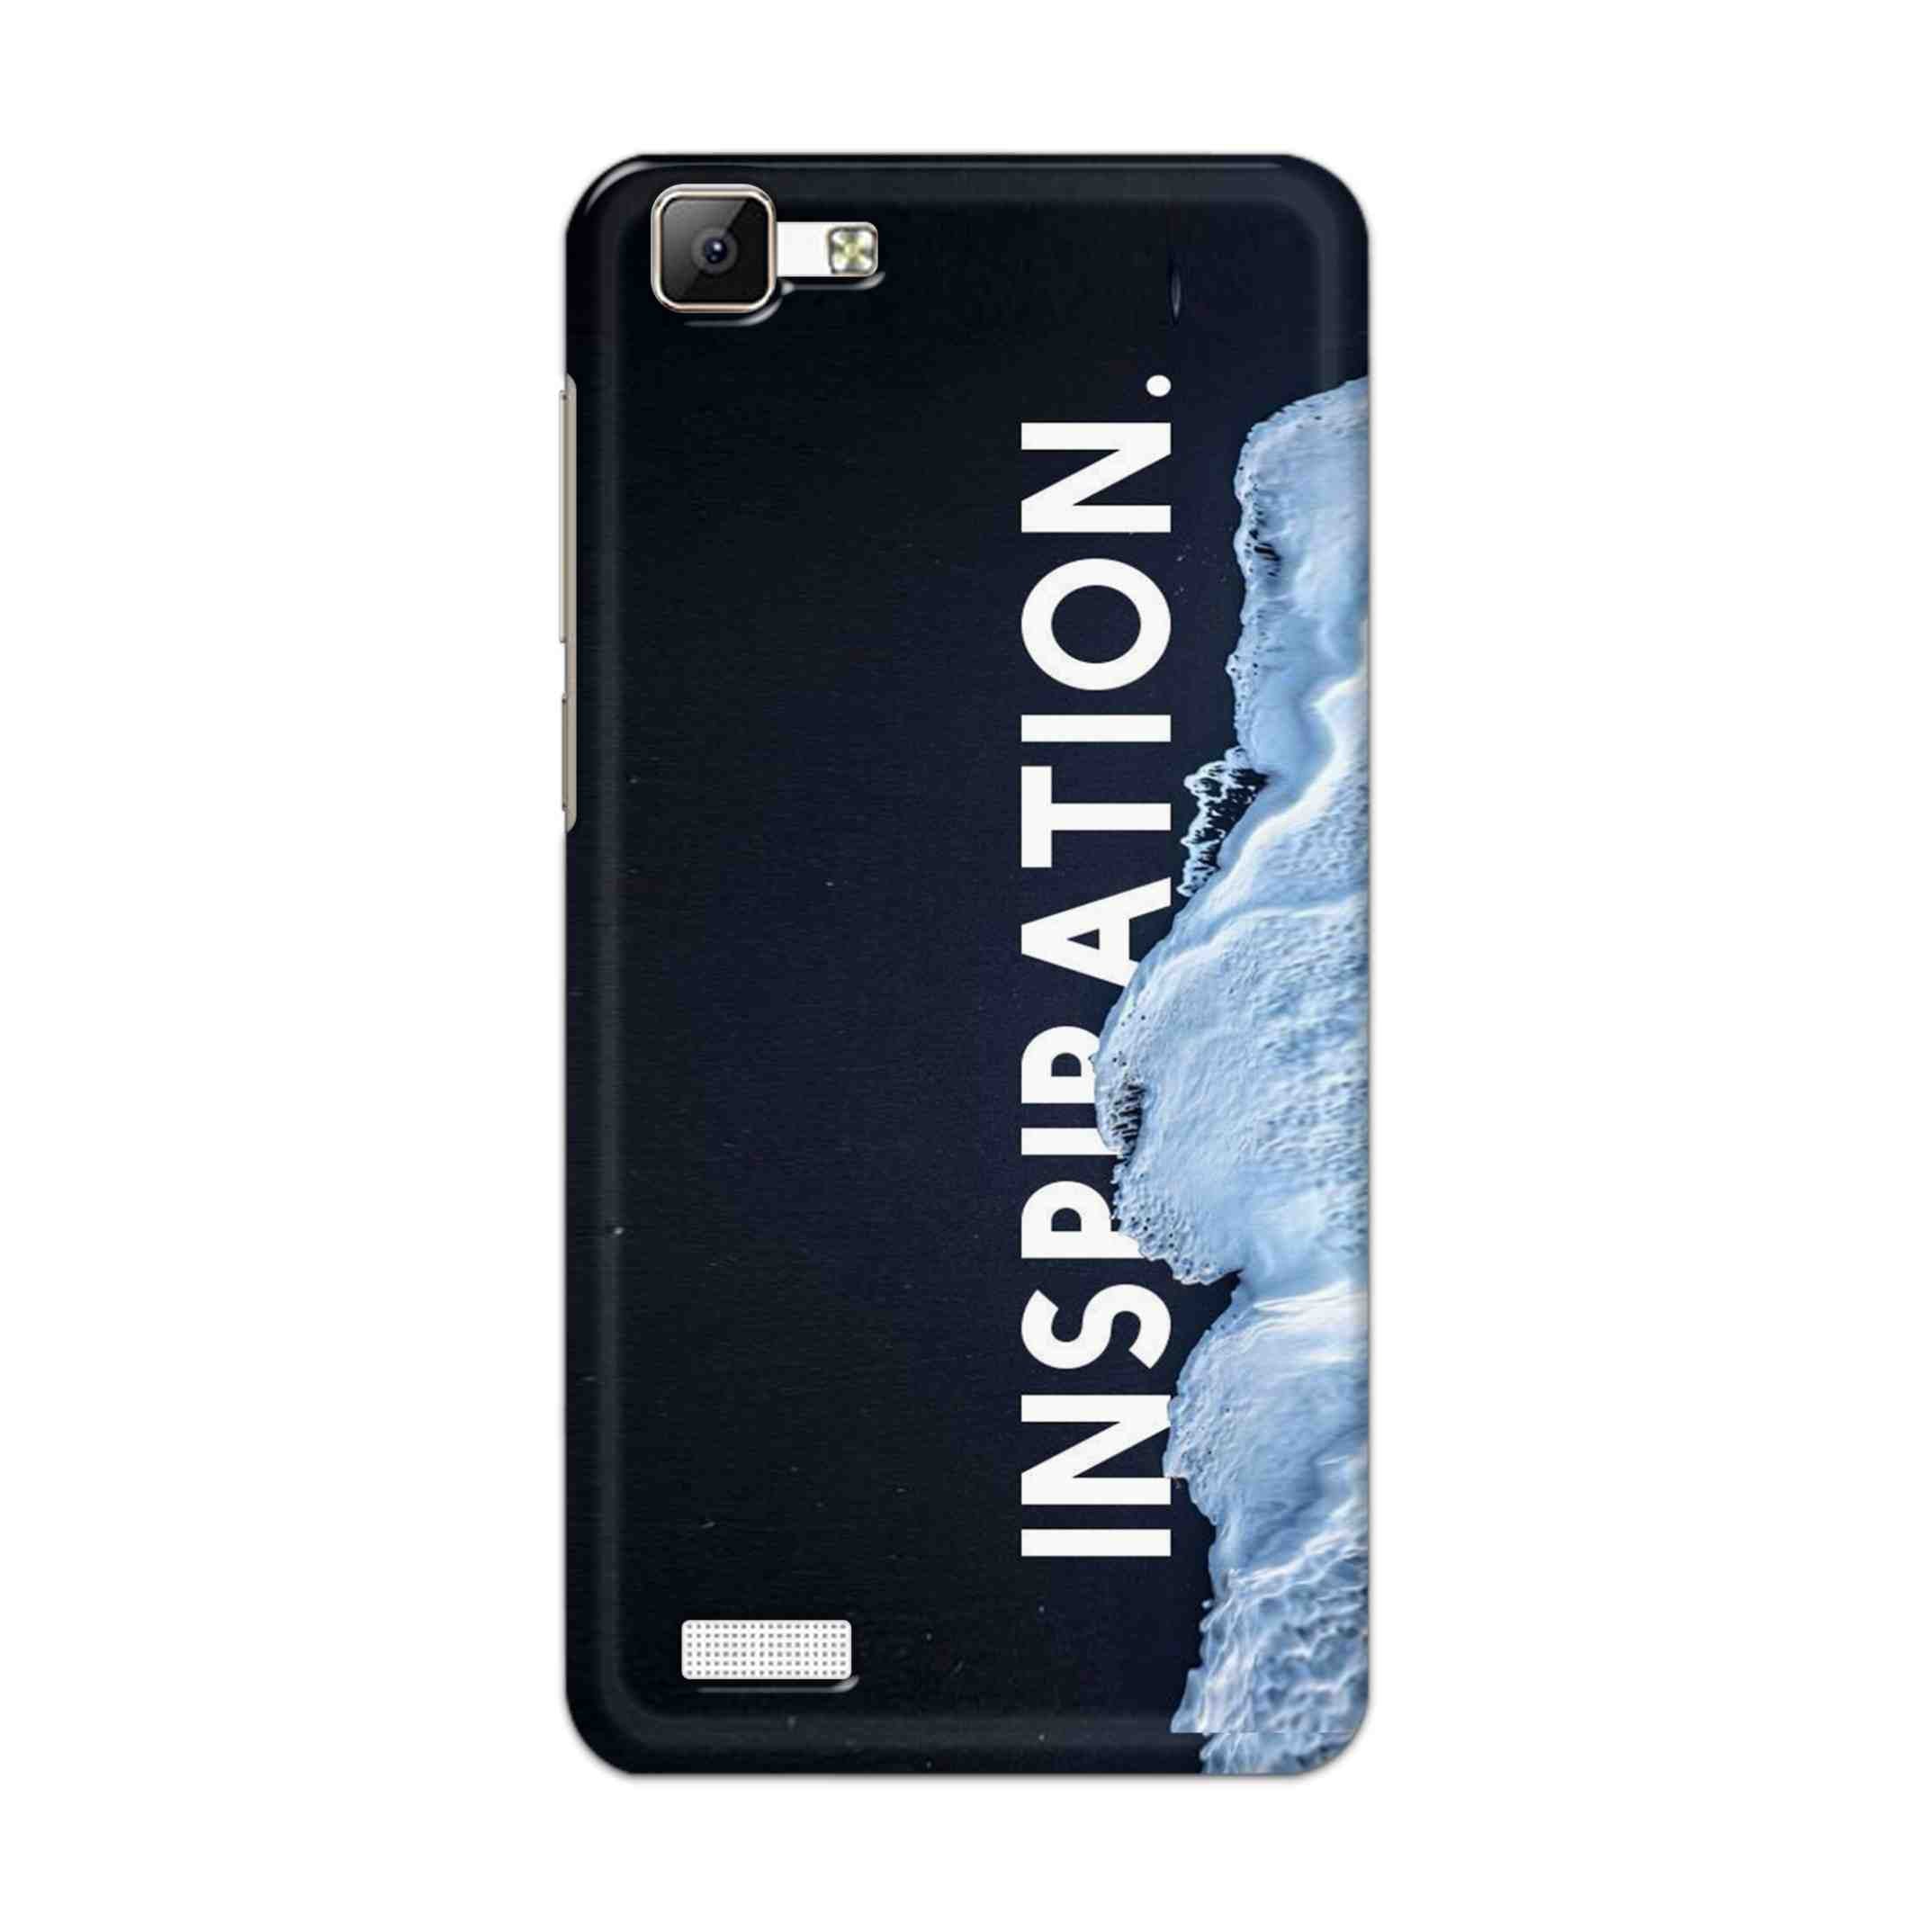 Buy Inspiration Hard Back Mobile Phone Case Cover For Vivo Y35 Online